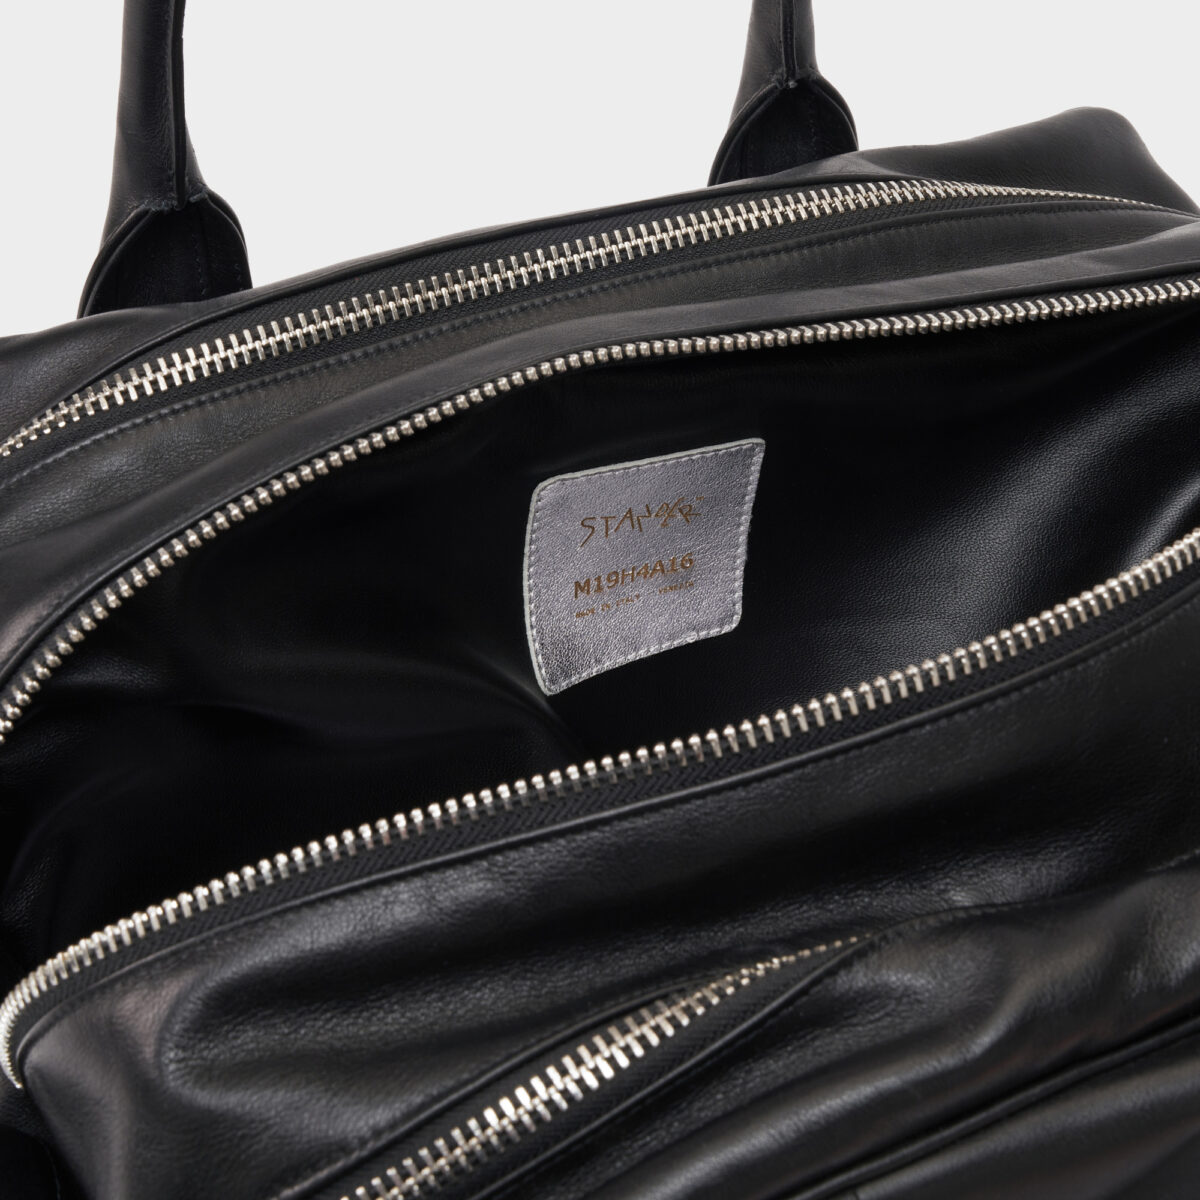 p16-leather-bag_stander-indossato1